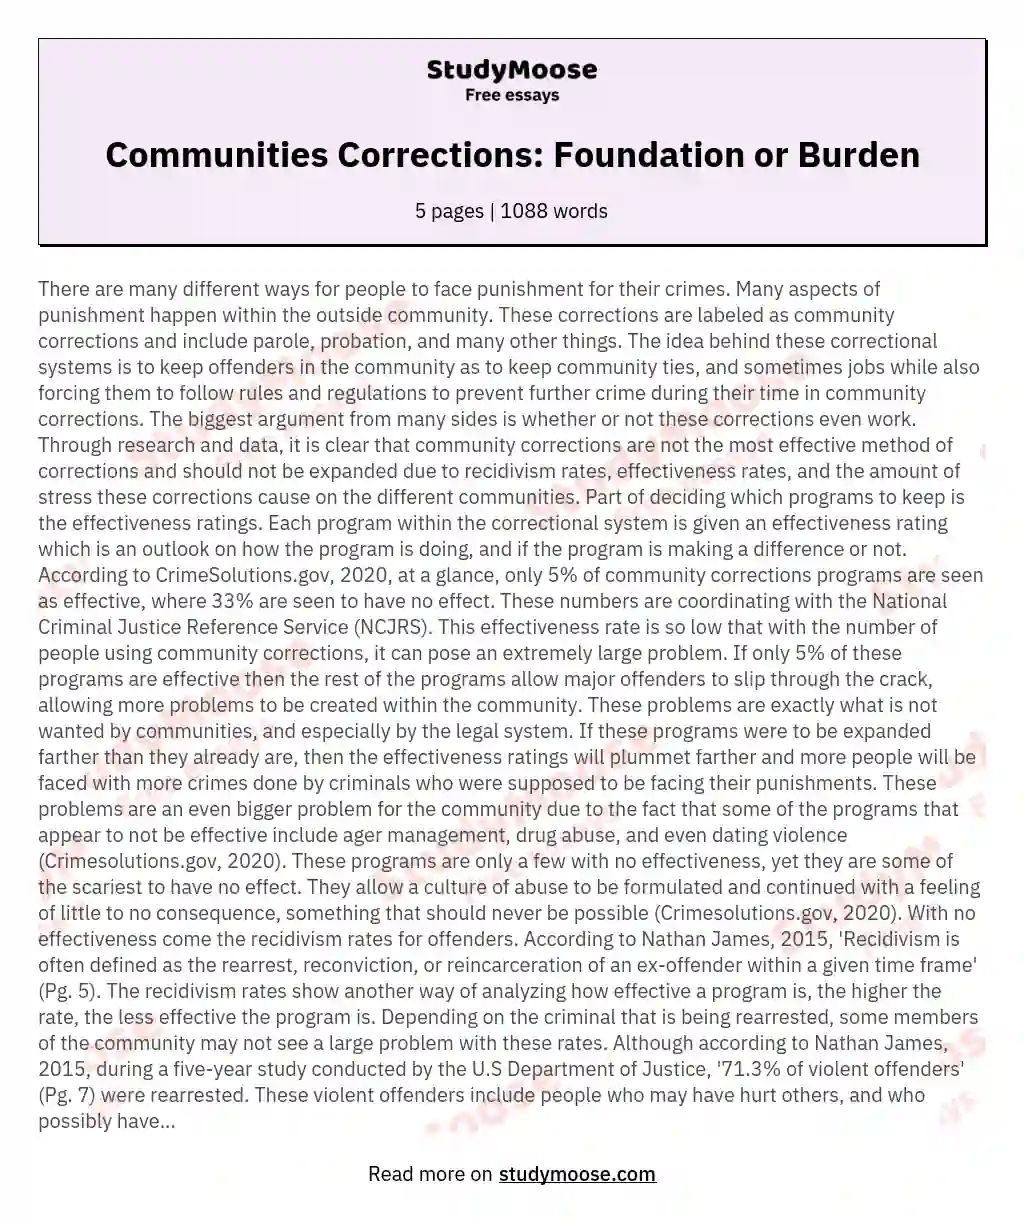 Communities Corrections: Foundation or Burden essay